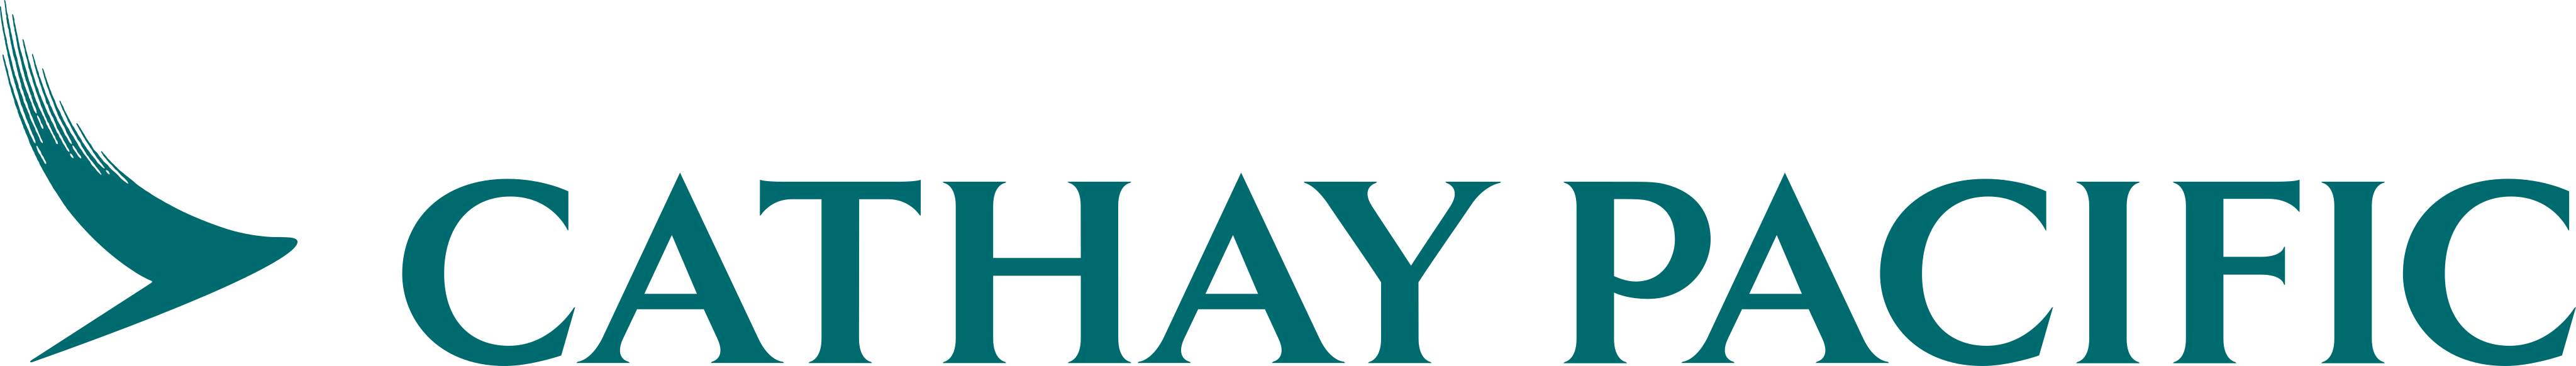 cathay pacific logo - Cathay Pacific Logo